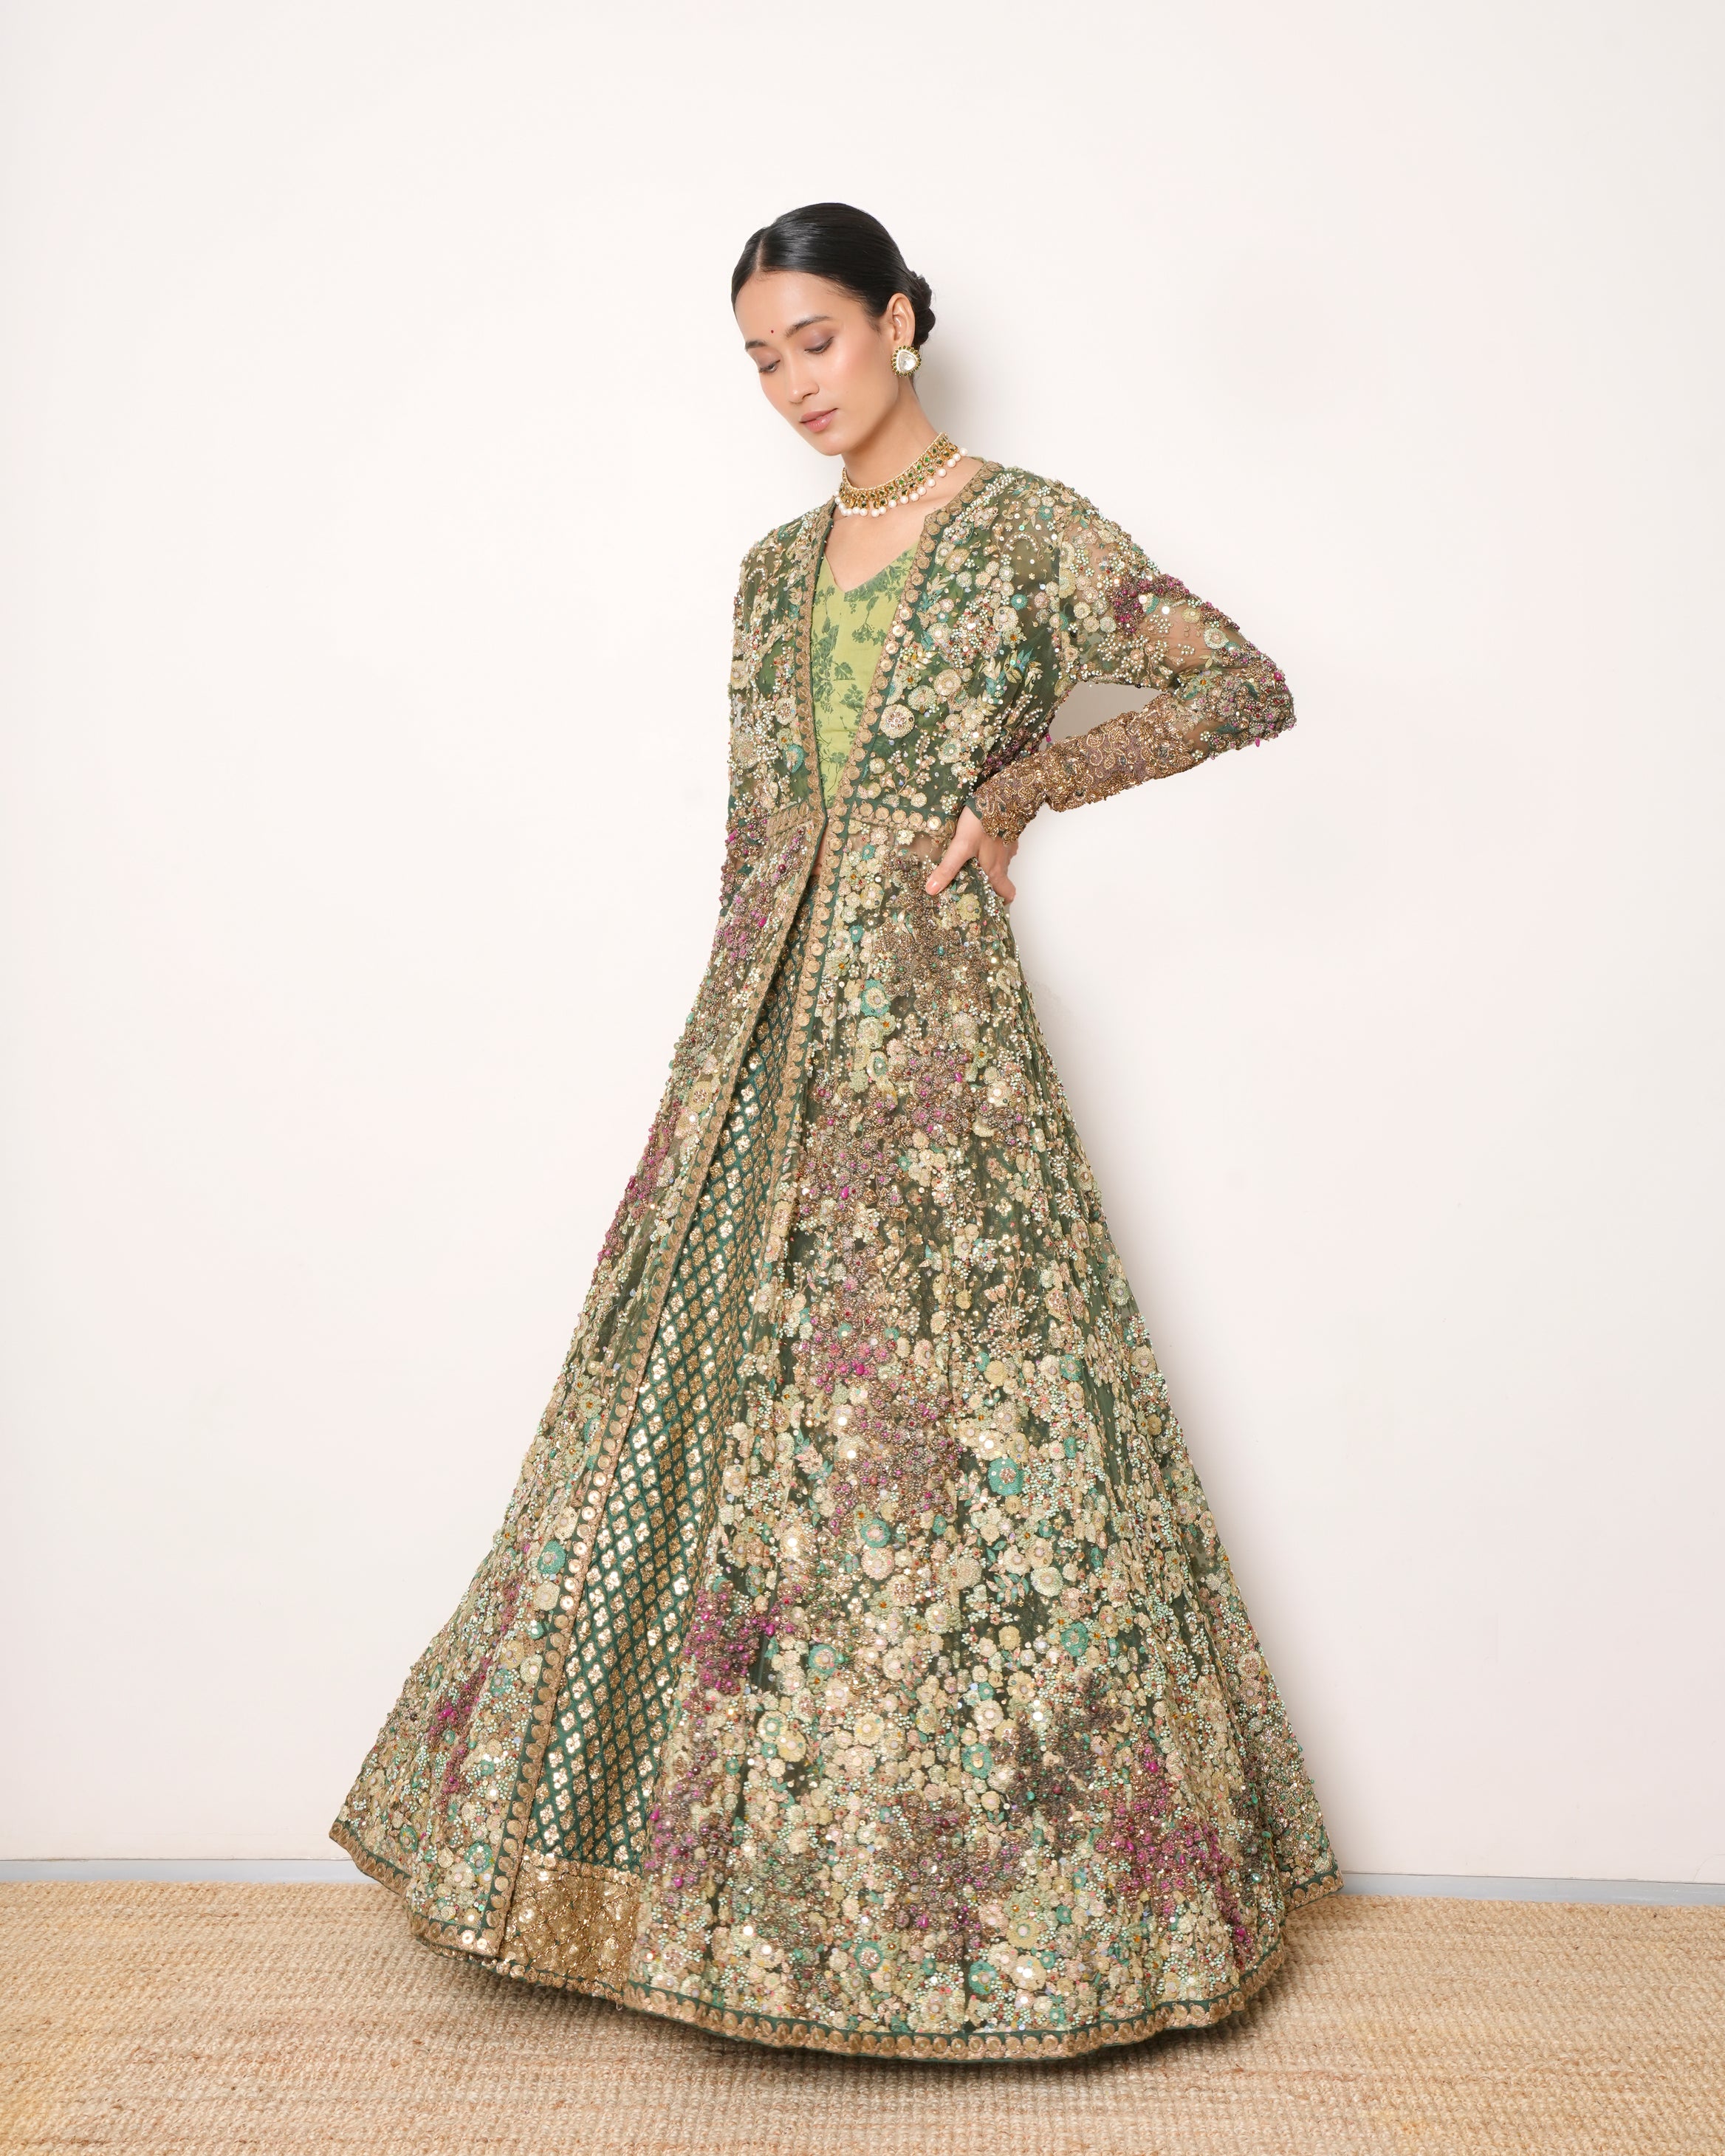 Shanaya Kapoor Wedding Outfits | Teenage Fashion | Sarees for Young Girls